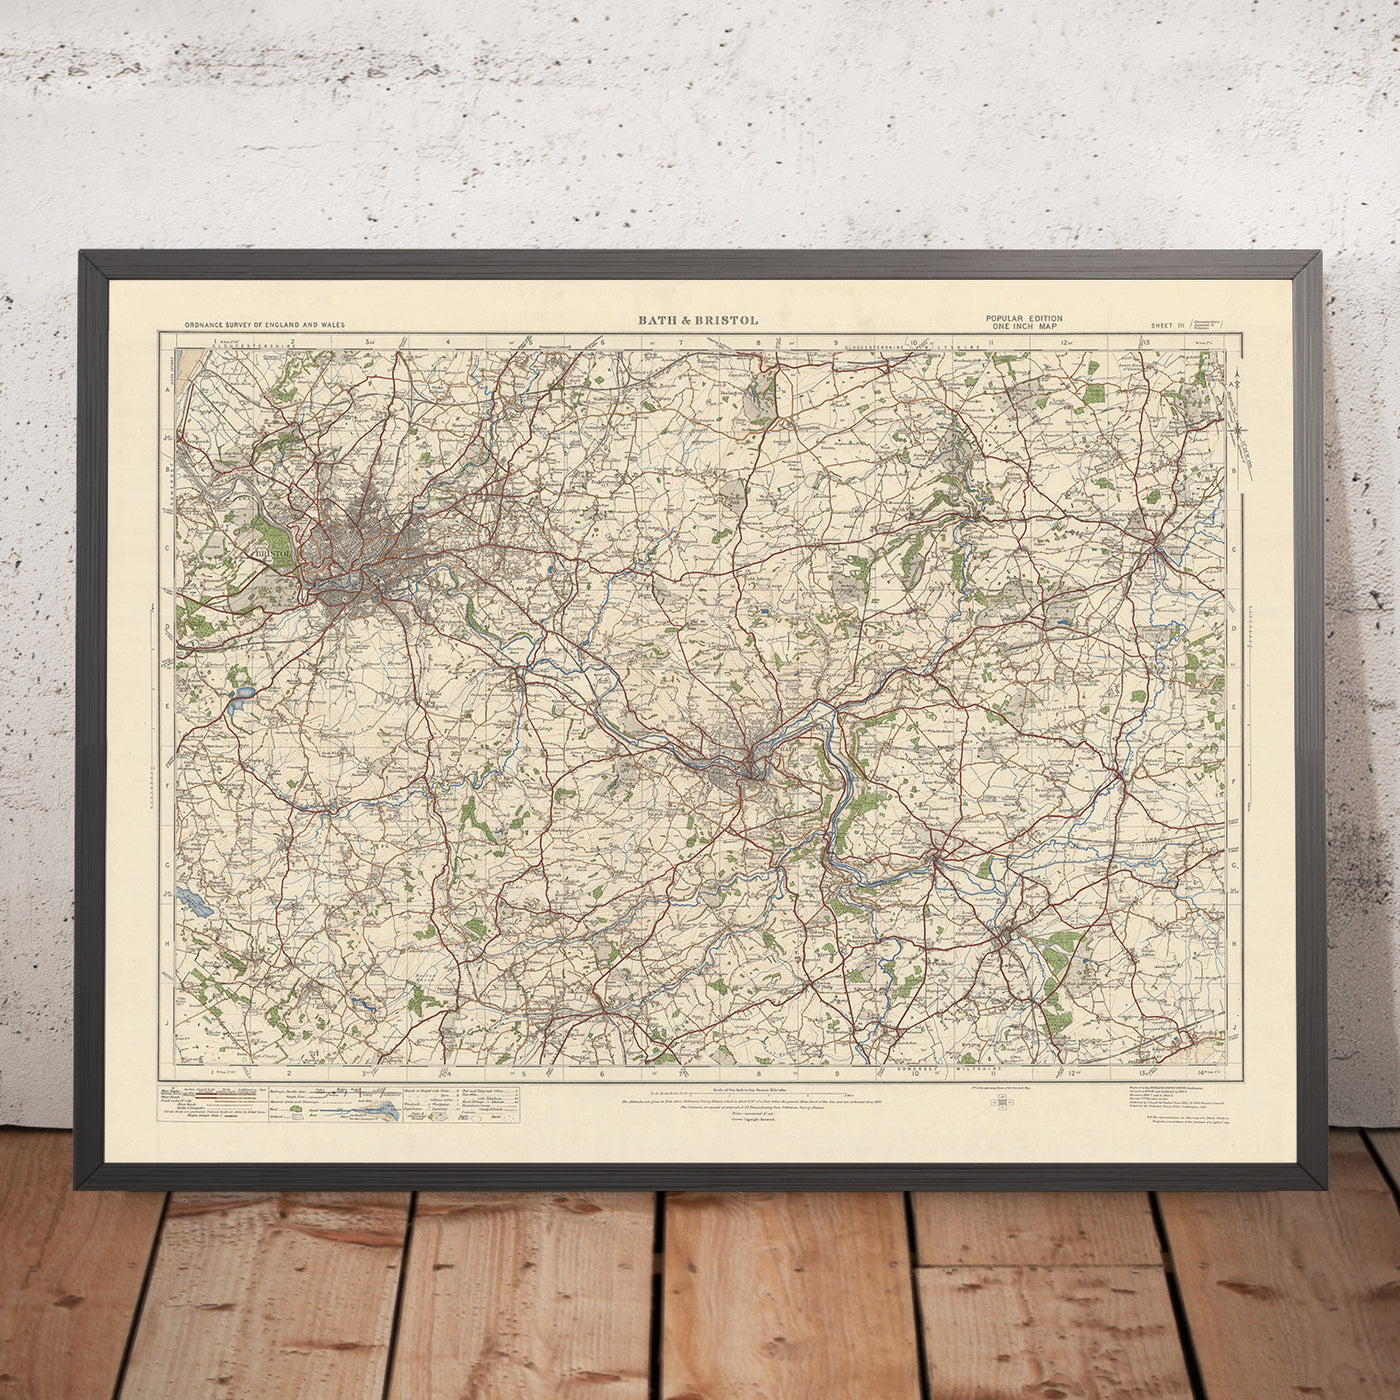 Old Ordnance Survey Map, Blatt 111 – Bath & Bristol, 1925: Chippenham, Trowbridge, Corsham, Melksham, Cotswolds AONB